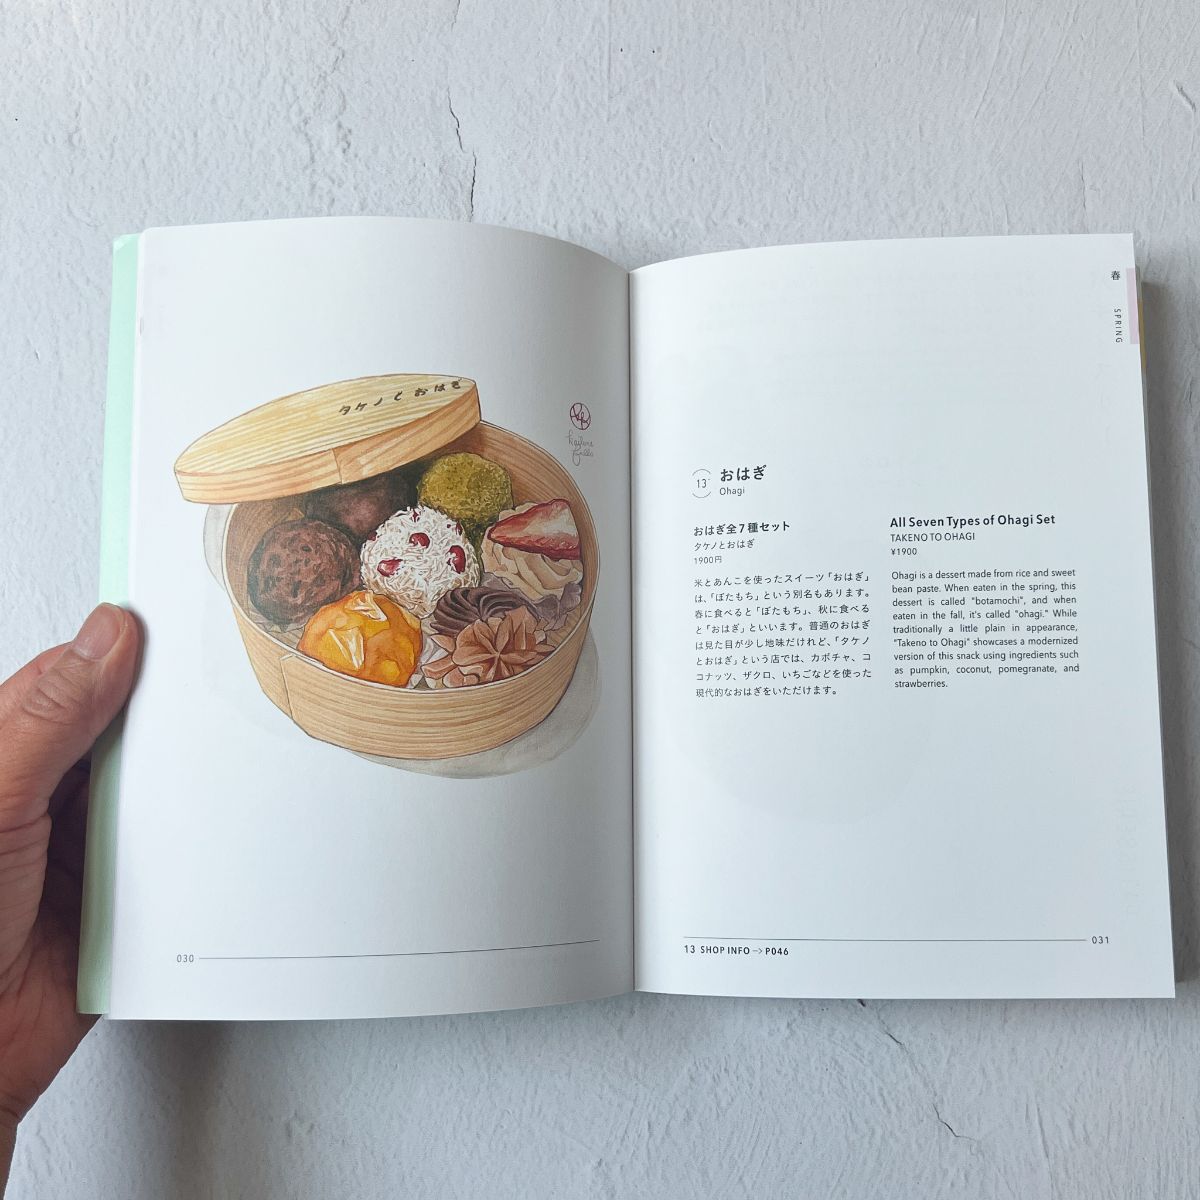 Food illustration Japan Guidebook "The Wonderful and Delicious in Japan"Nagamochi Shop